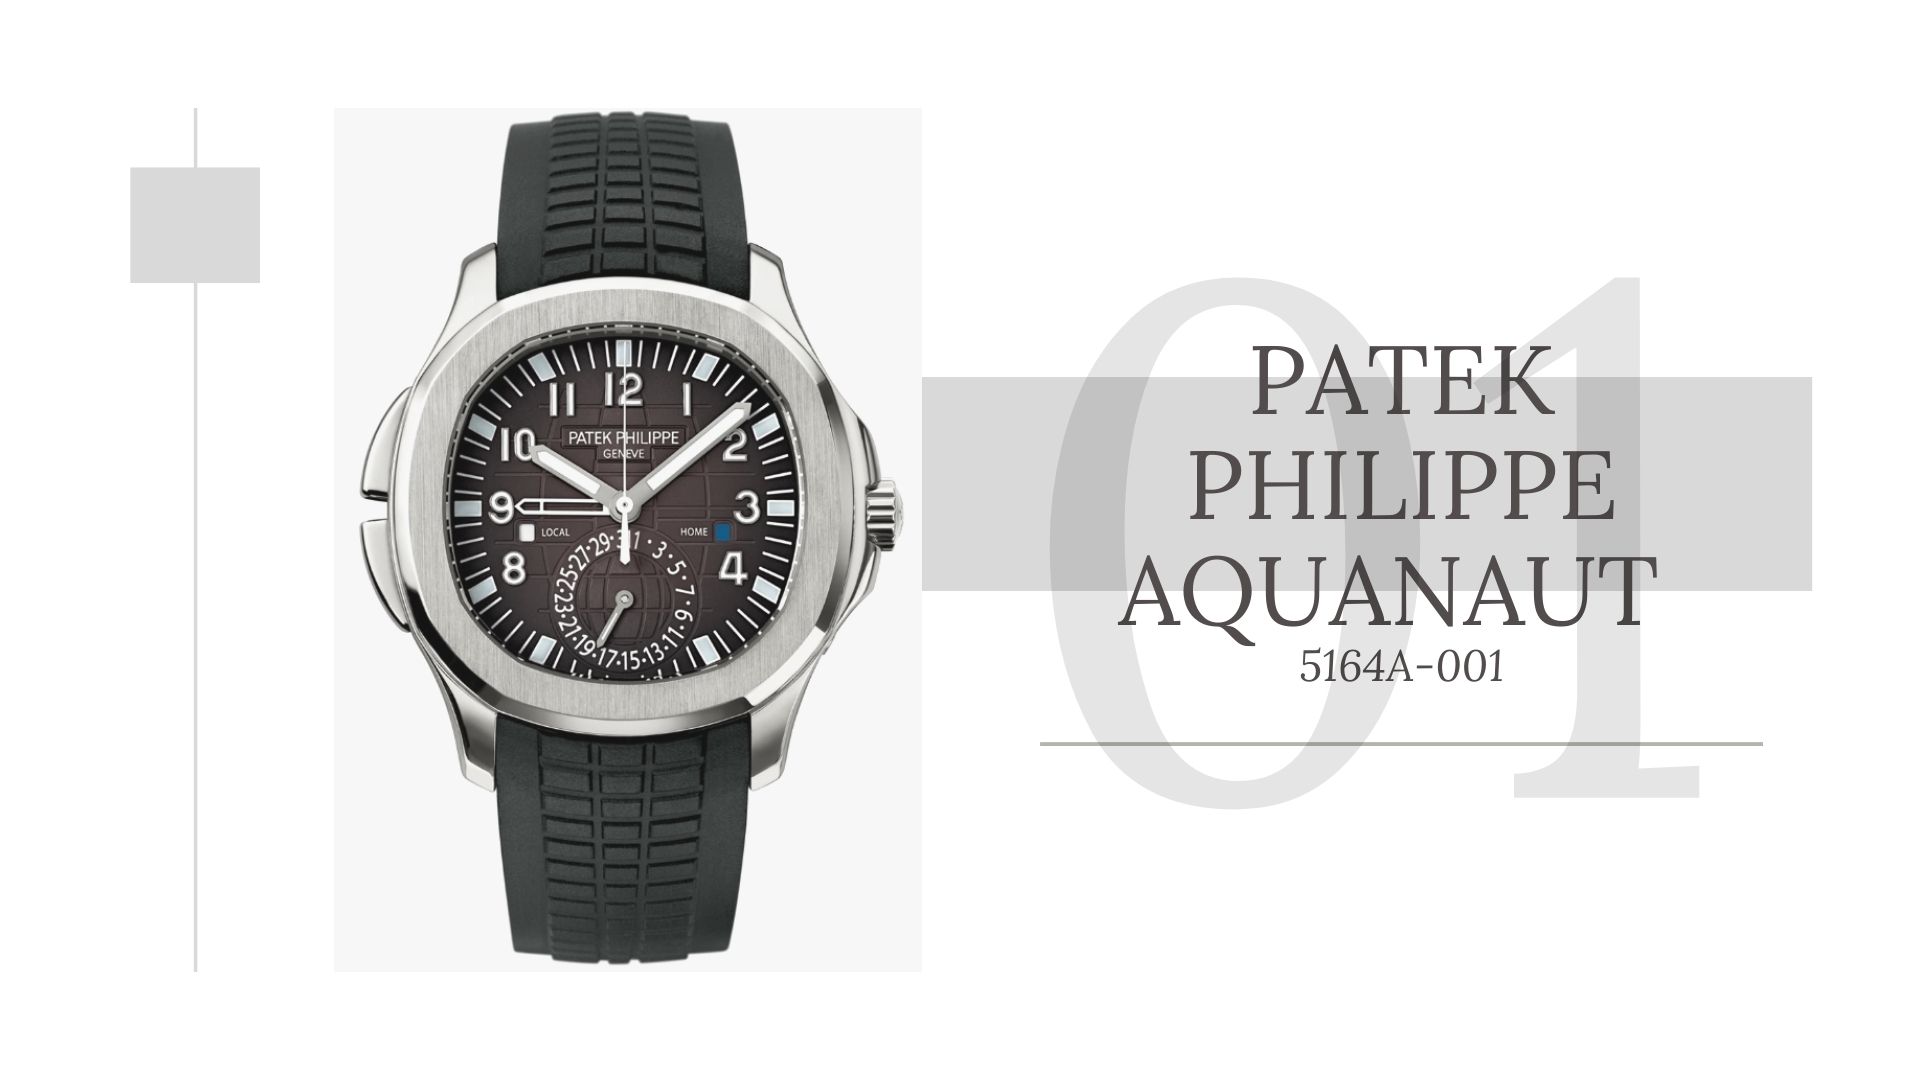 Patek Philippe Aquanaut เจ้าของรางวัลนาฬิกาสำหรับการเดินทางที่ดีที่สุดในปี 2011 รุ่น 5164A-001